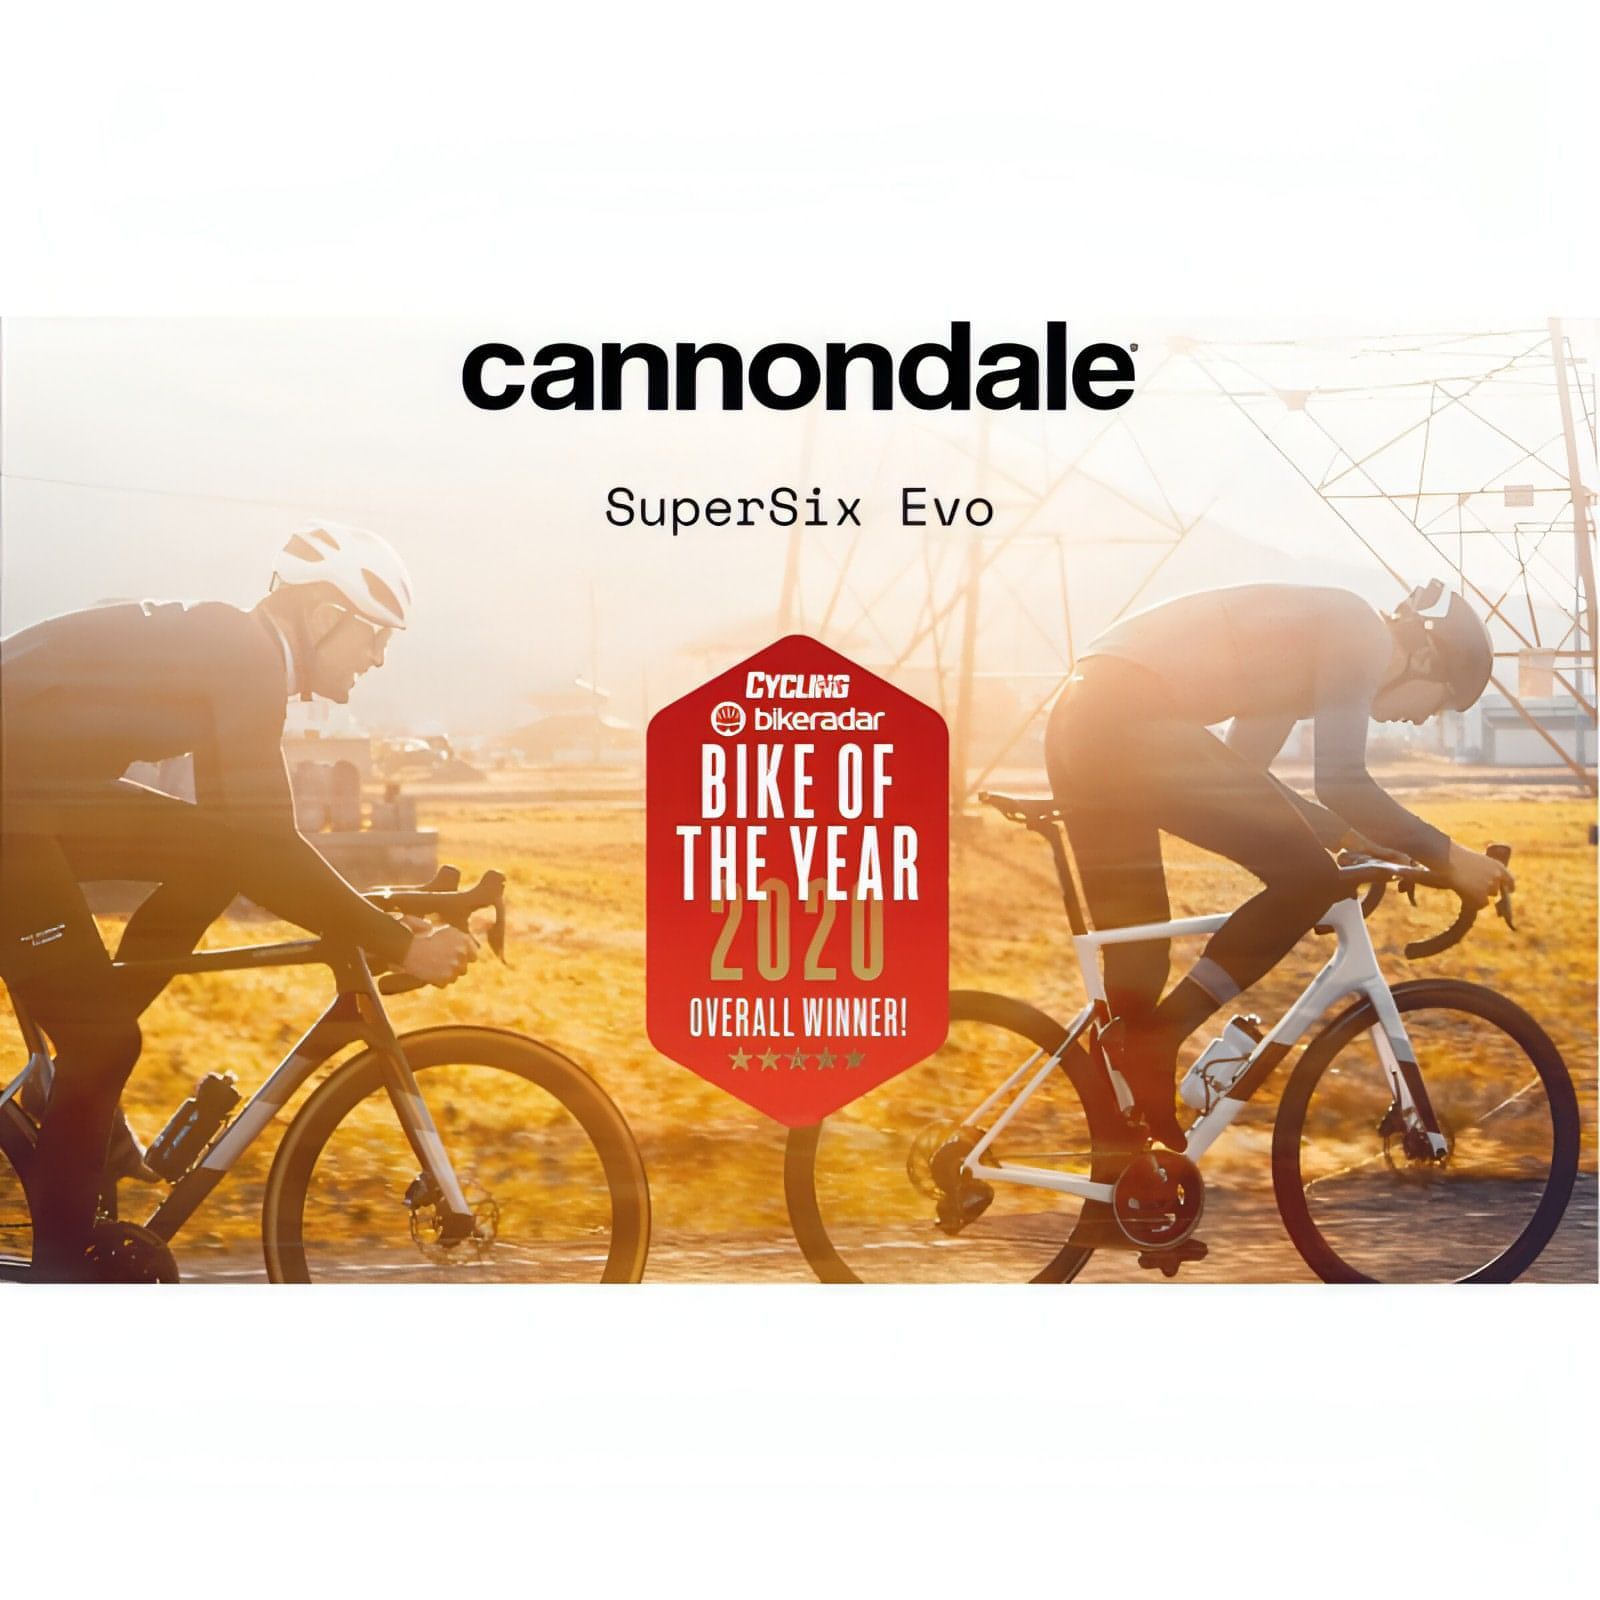 Cannondale SuperSix Evo Disc 105 Mens Road Bike 2021 - Bio Lime - Start Fitness